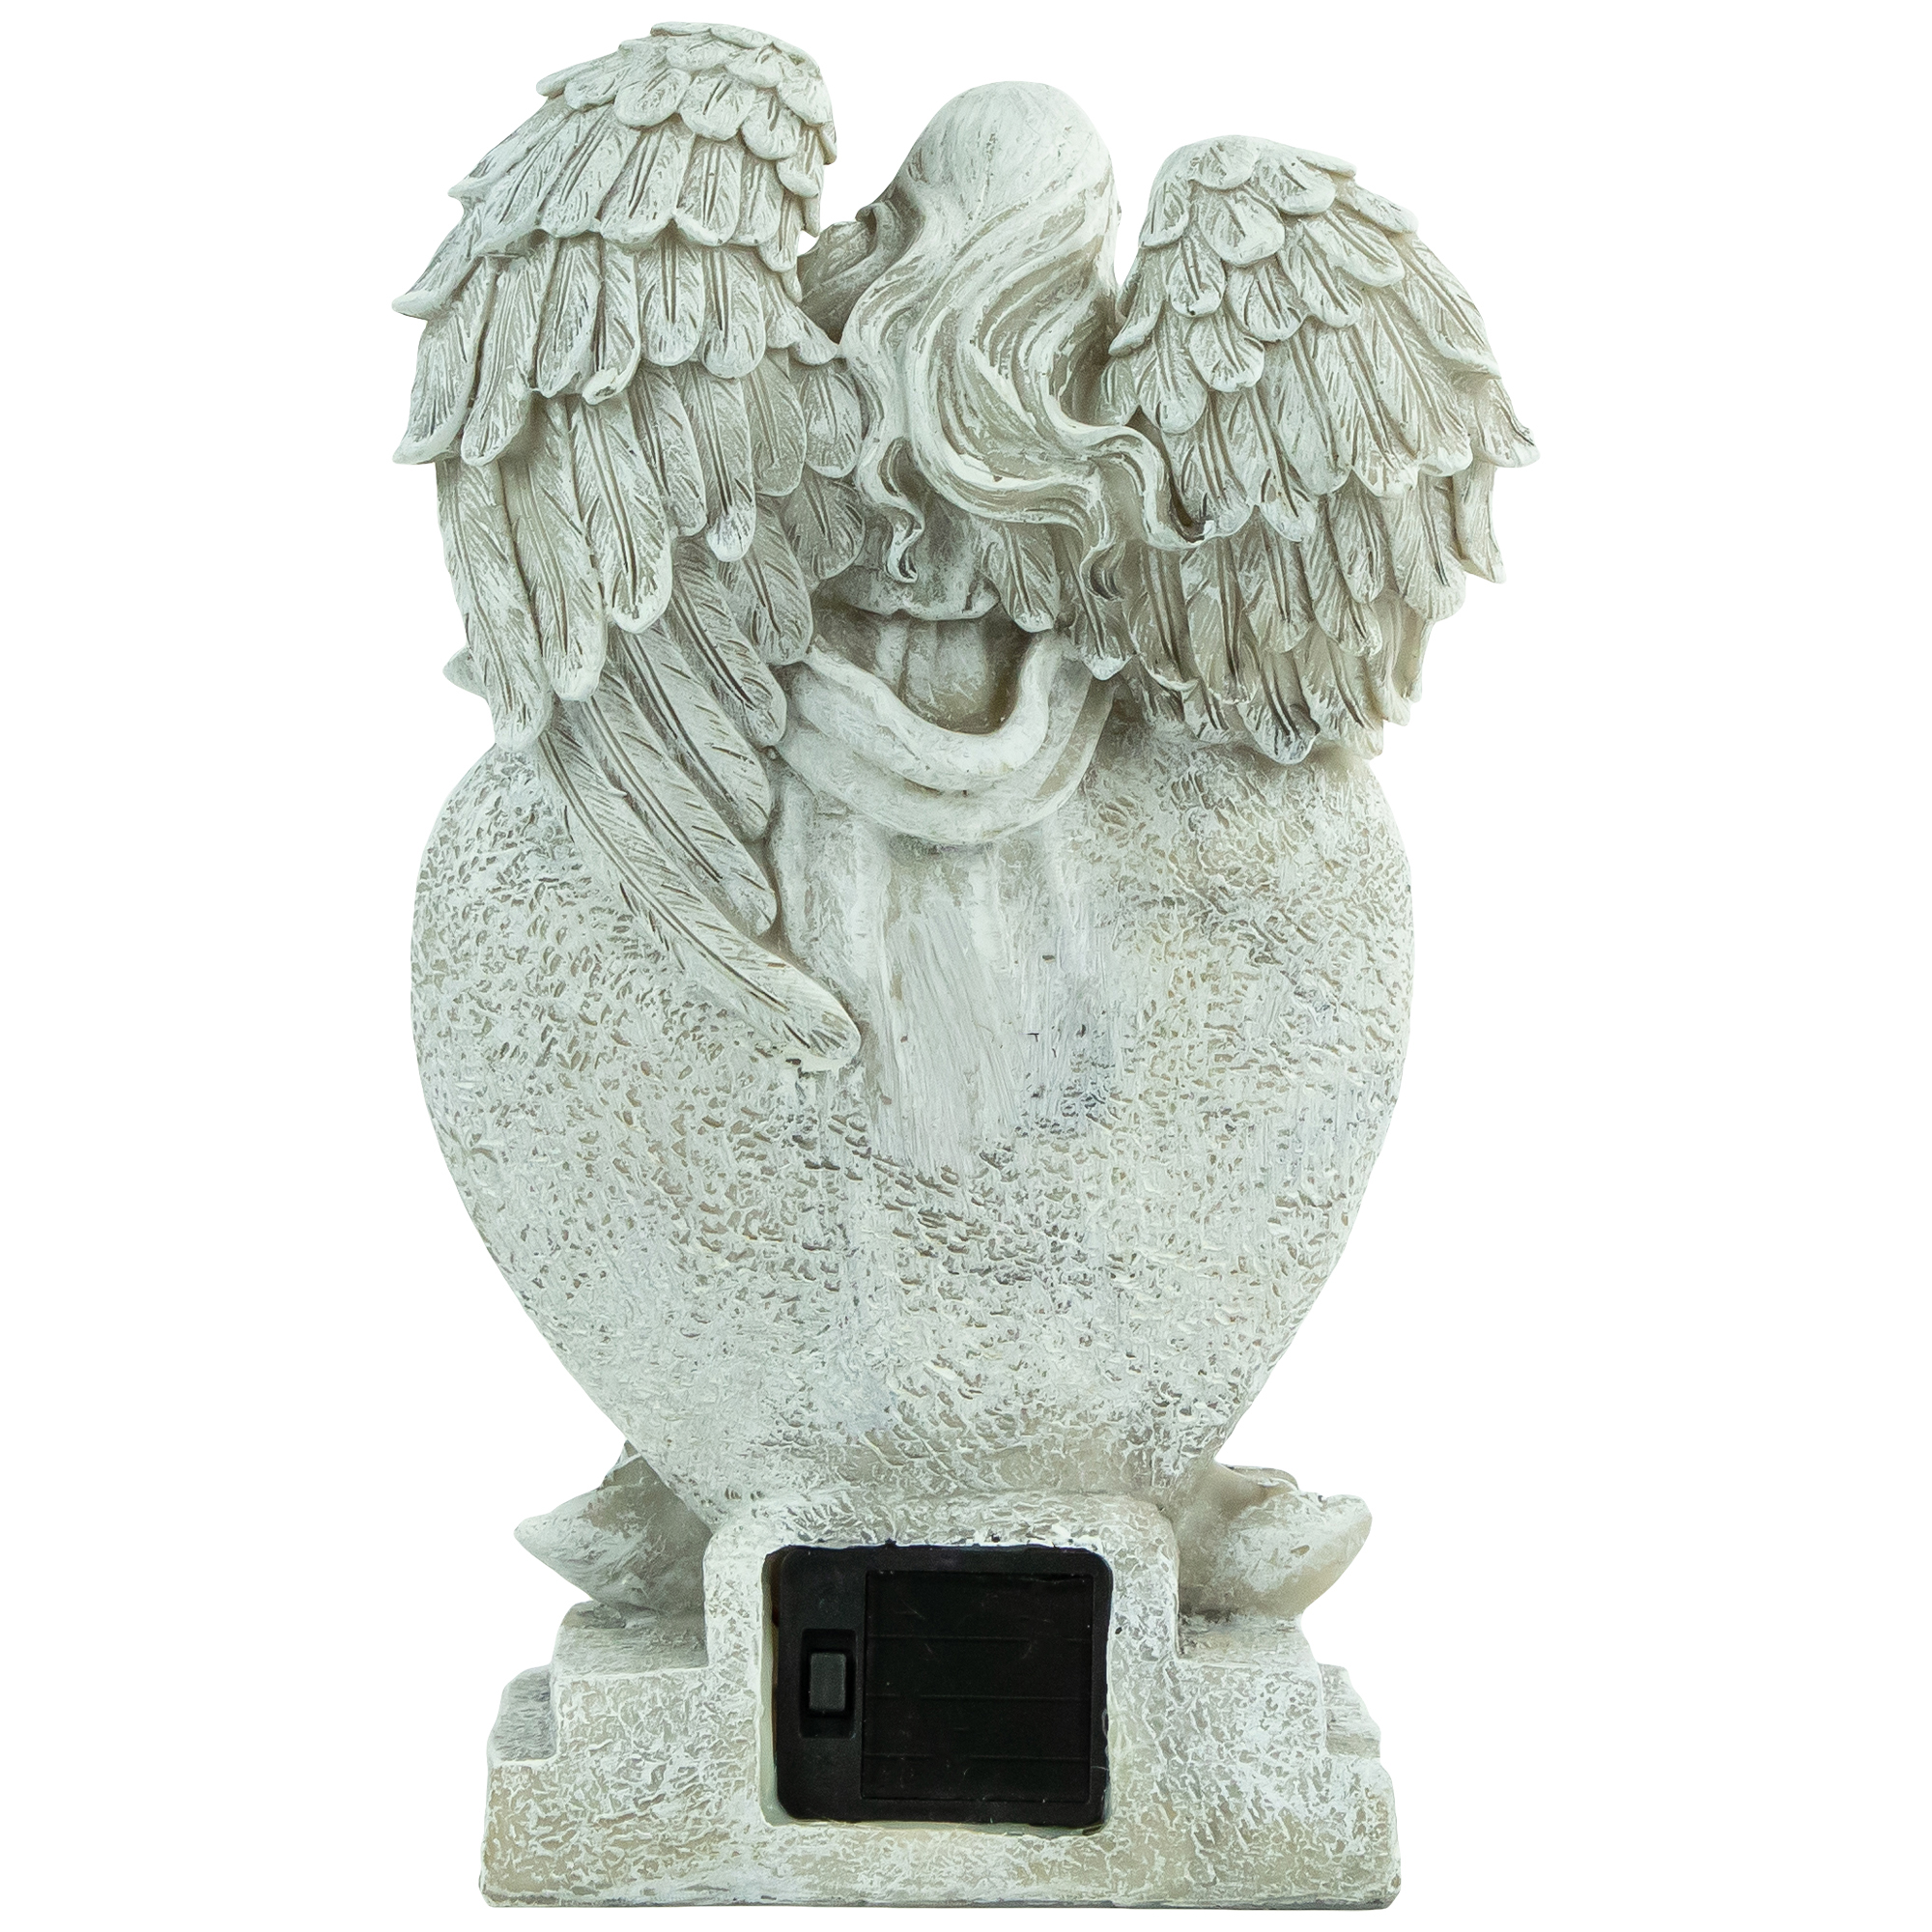 Northlight 10" Solar LED Lighted Praying Angel "In Loving Memory" Outdoor Garden Statue - image 5 of 5